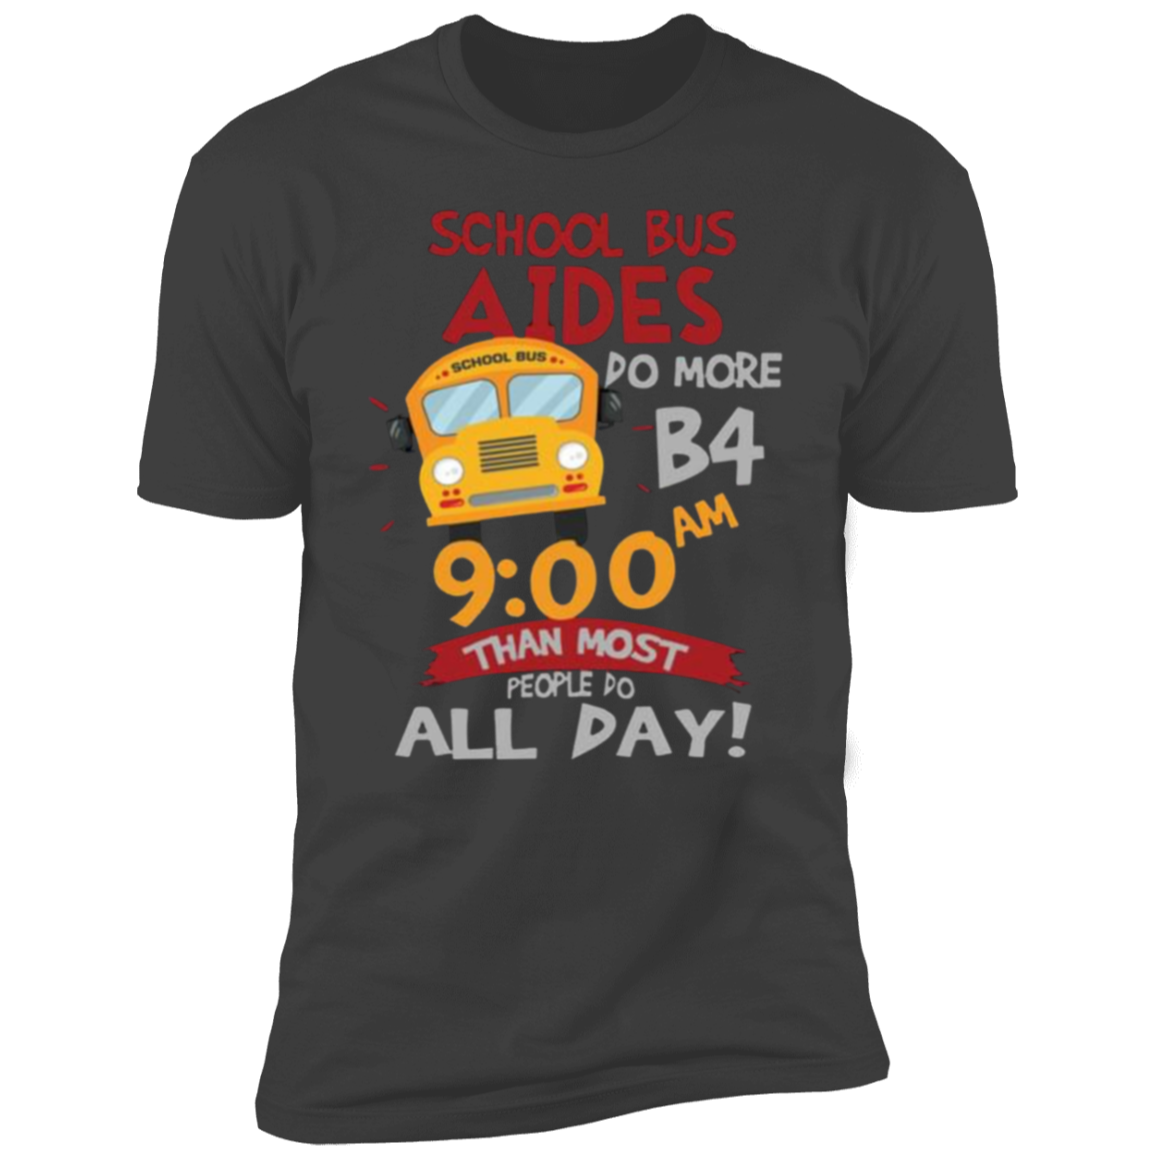 School Bus Aides do more B4! Tee